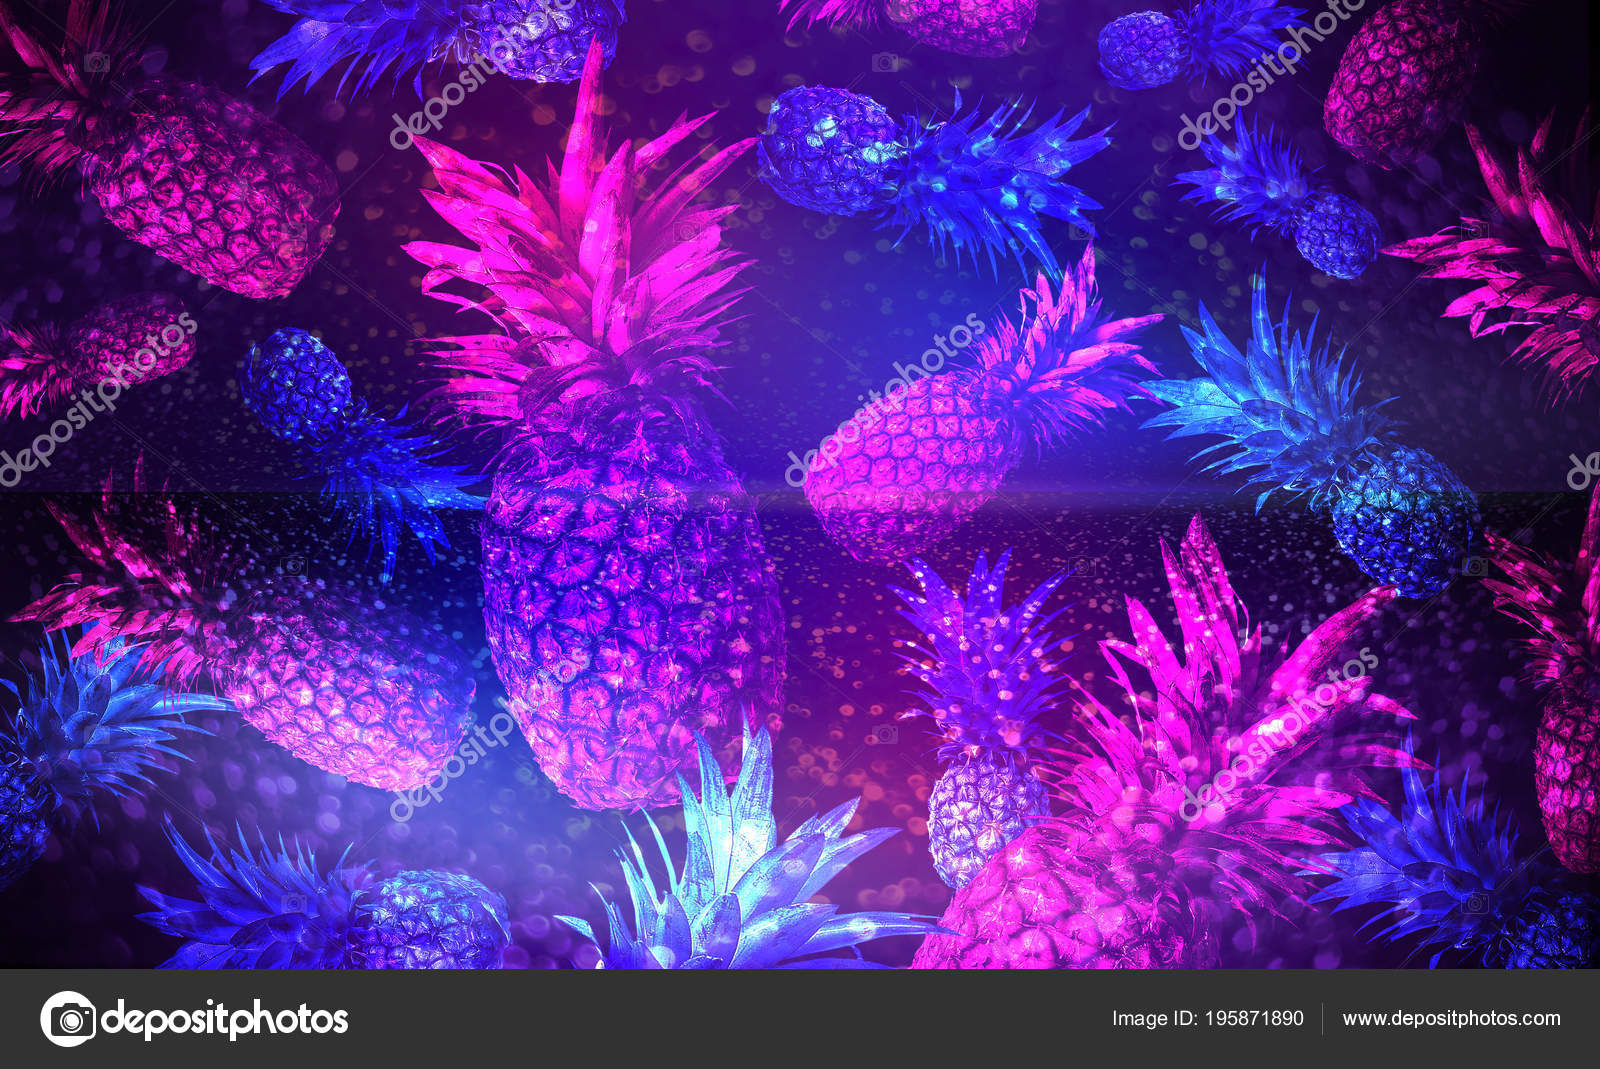 Cool Pineapple Wallpaper - HD Wallpaper 